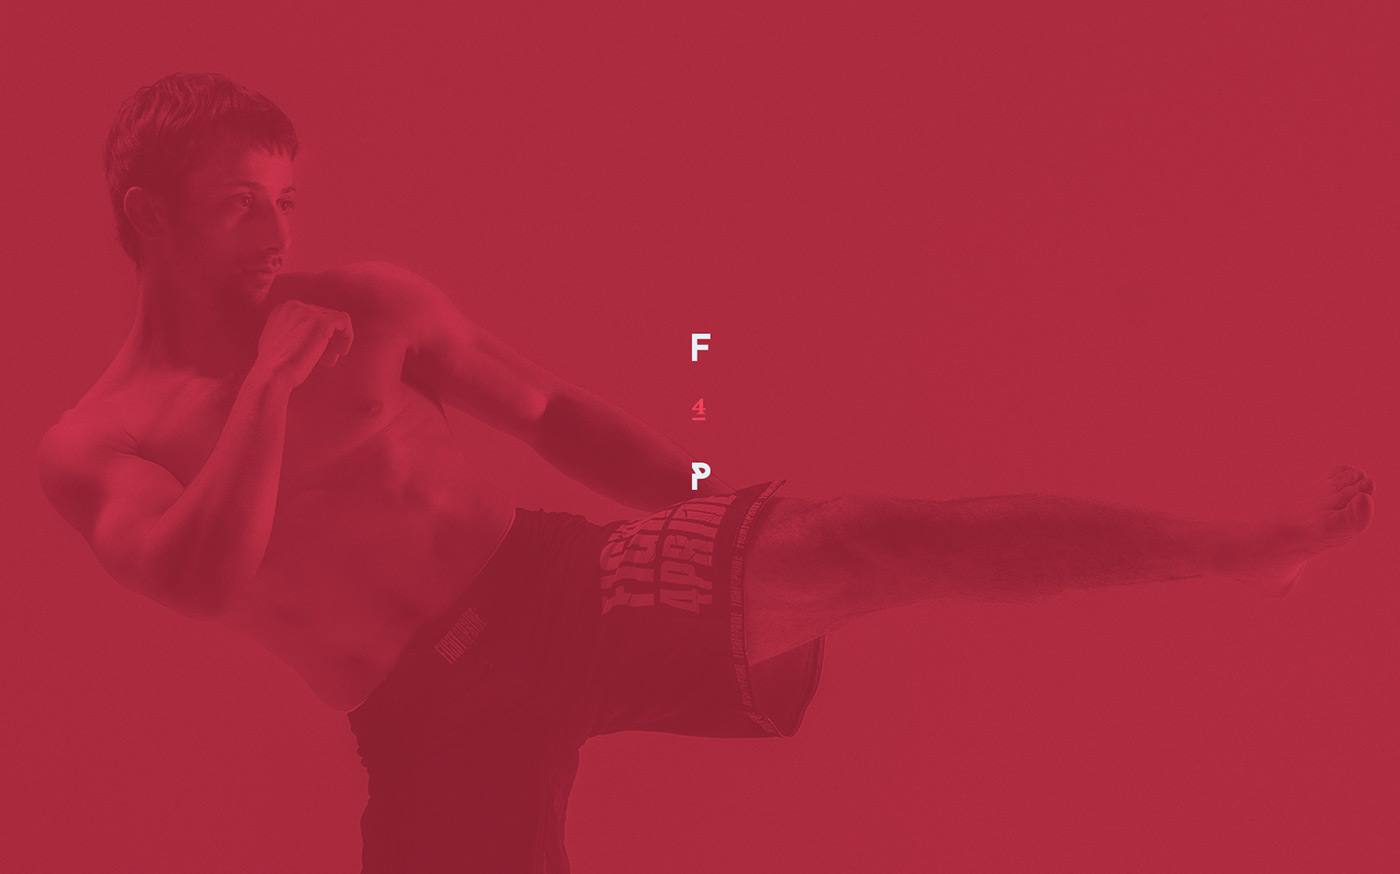 f4p fight pride fight 4 pride Martial Arts MMA Boxing Website Montreal Quebec interactive design brochure fullscreen Awards